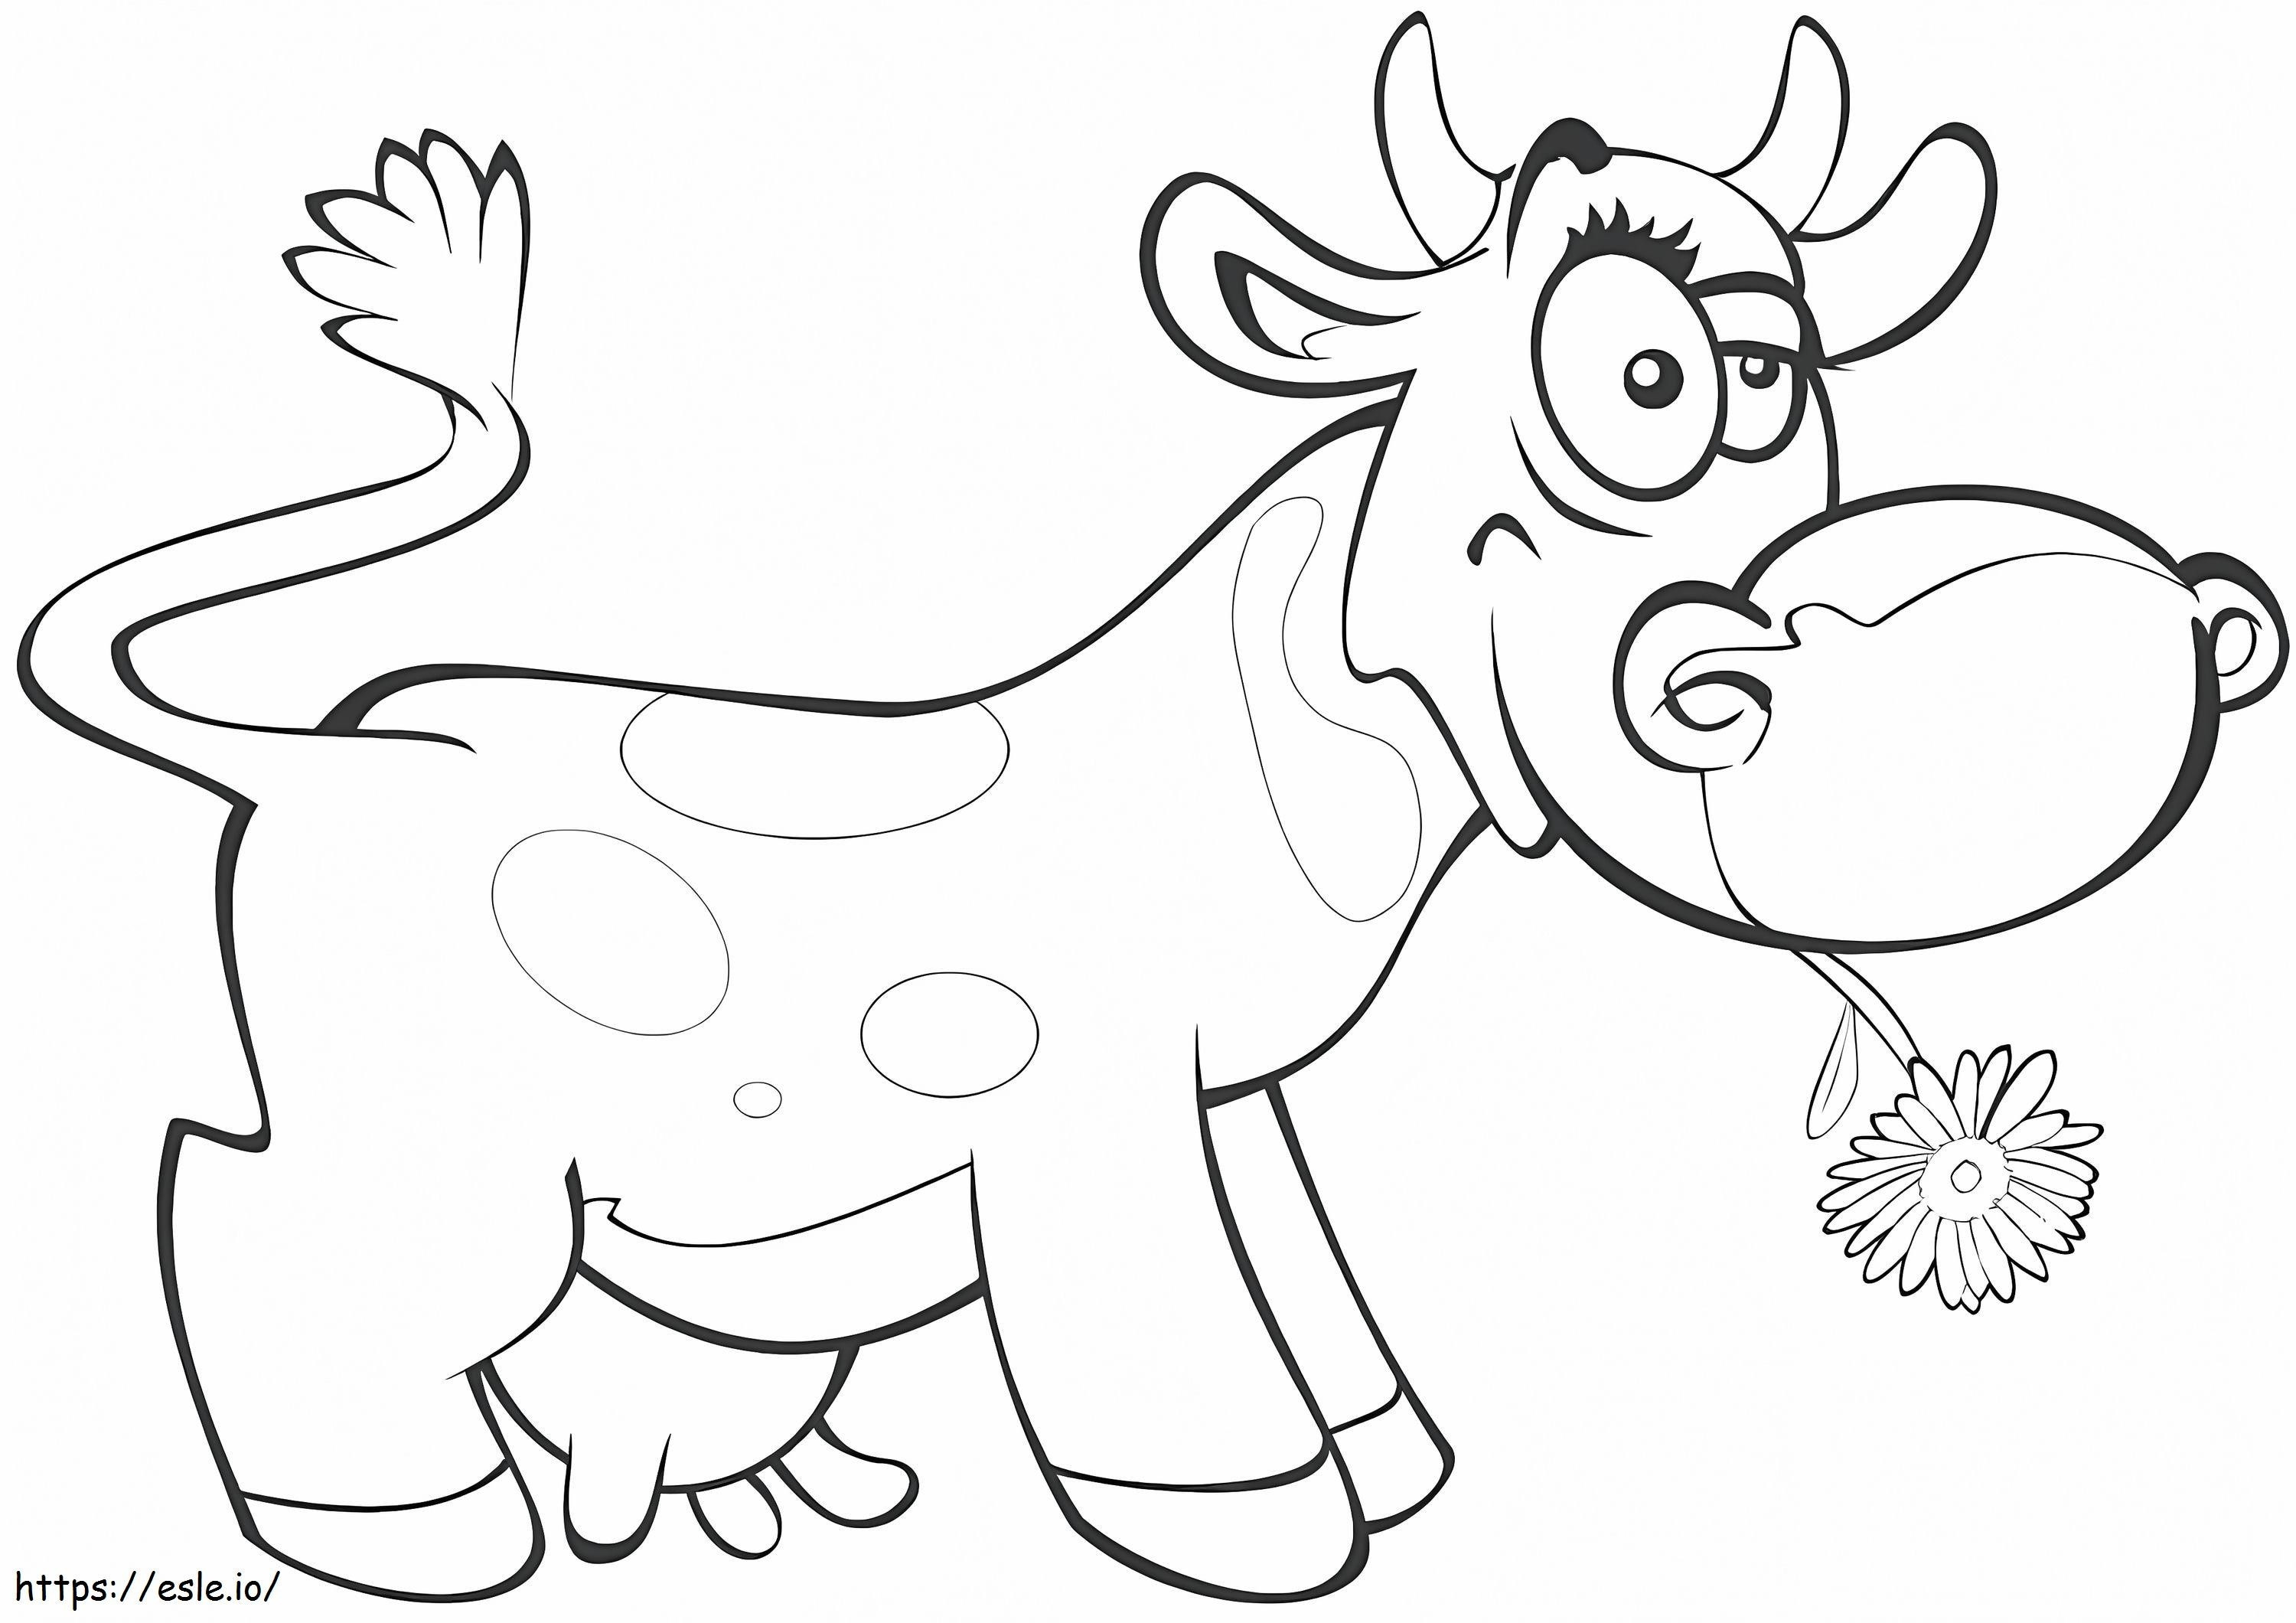 Cartoon Cow coloring page